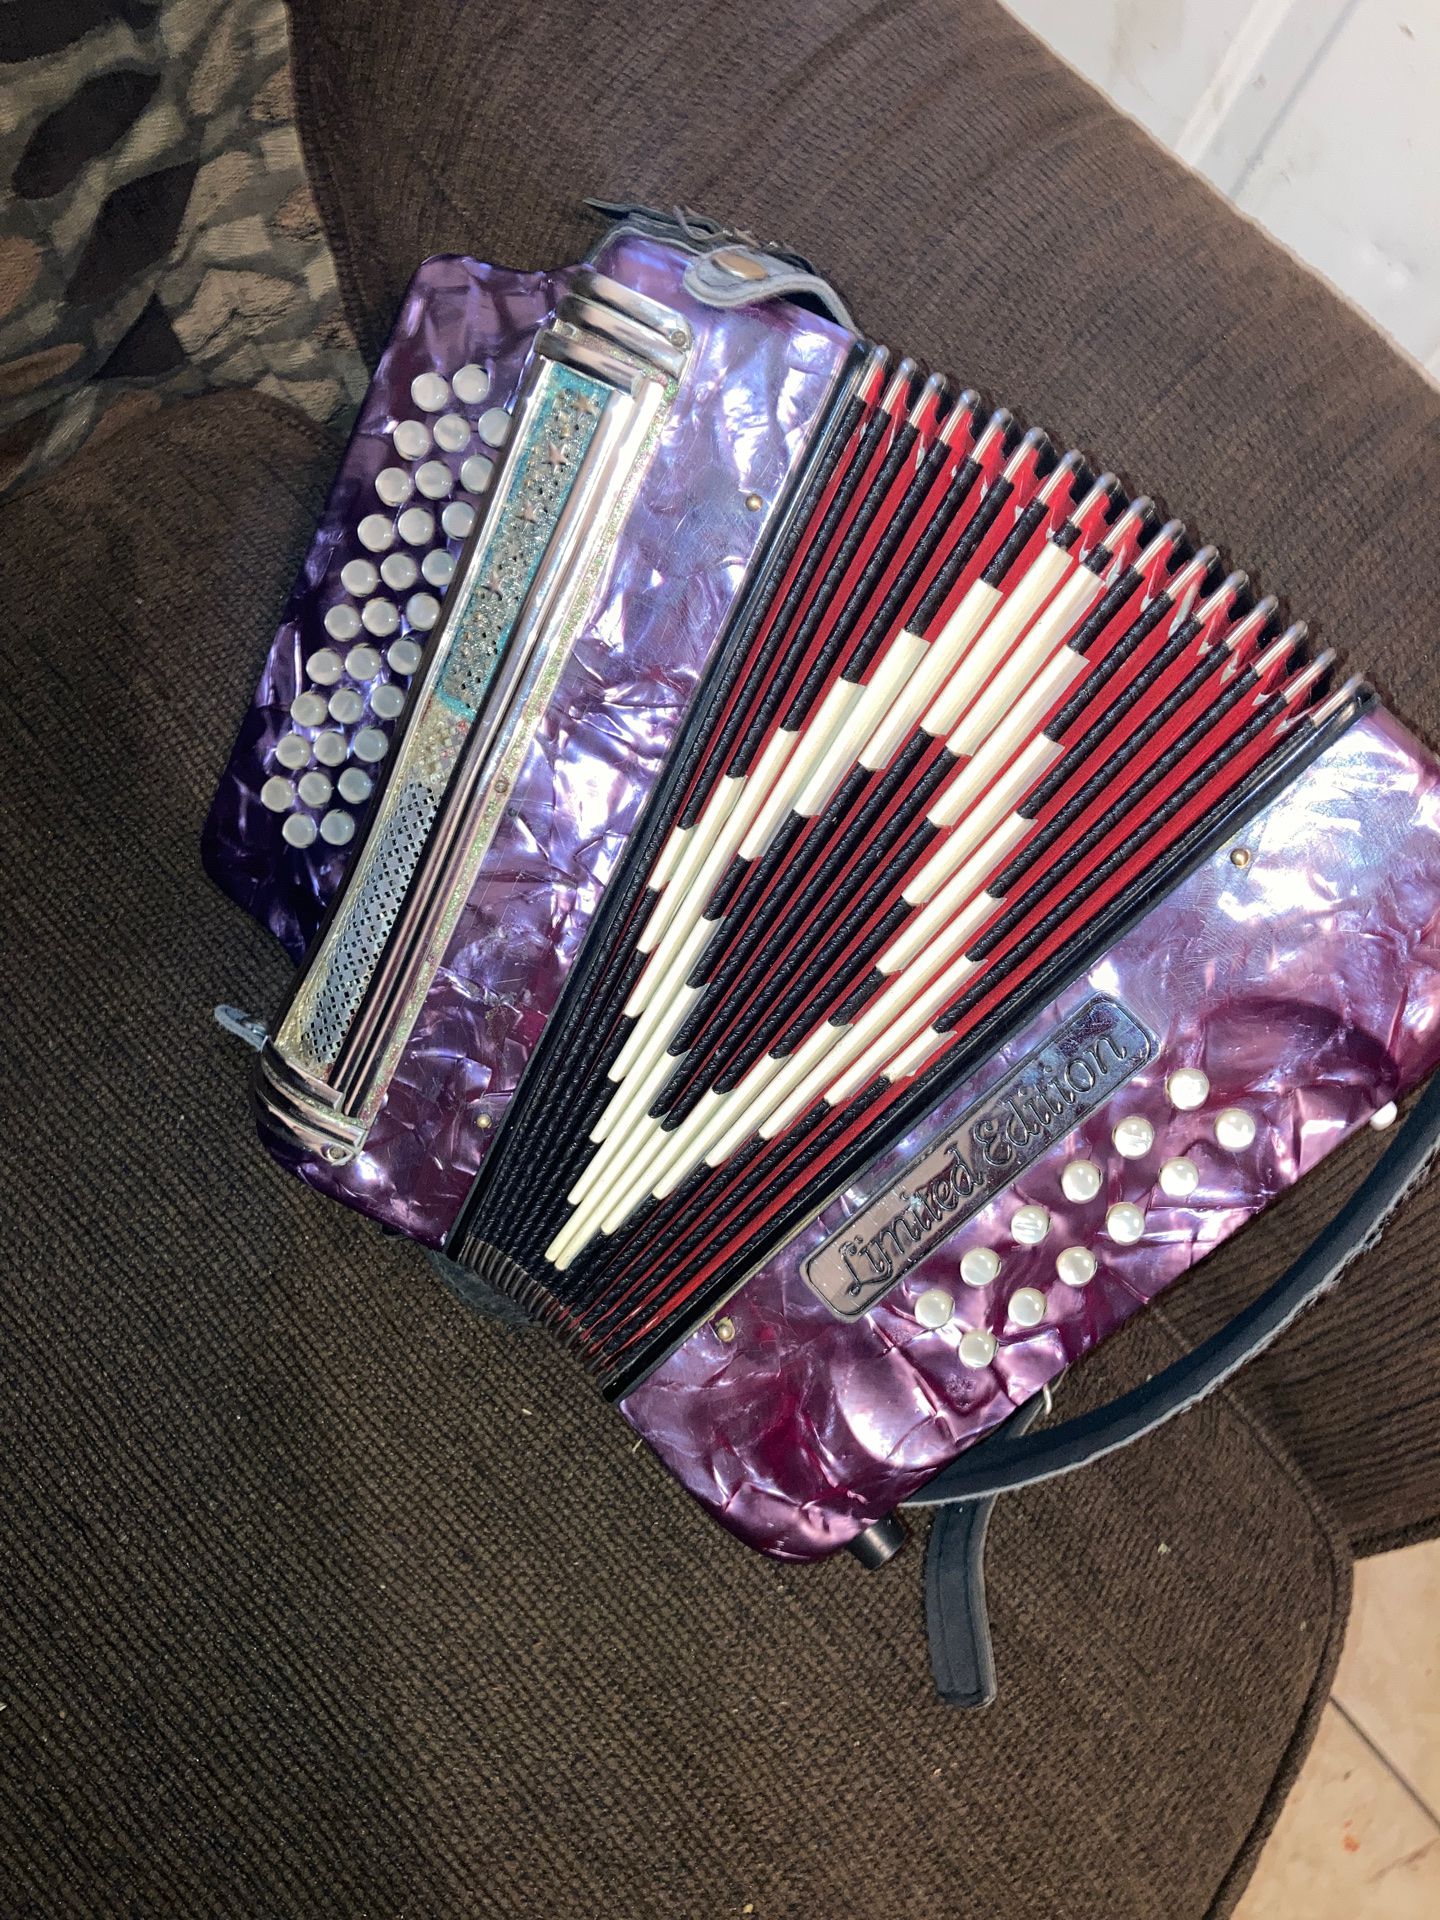 Limited edition accordion